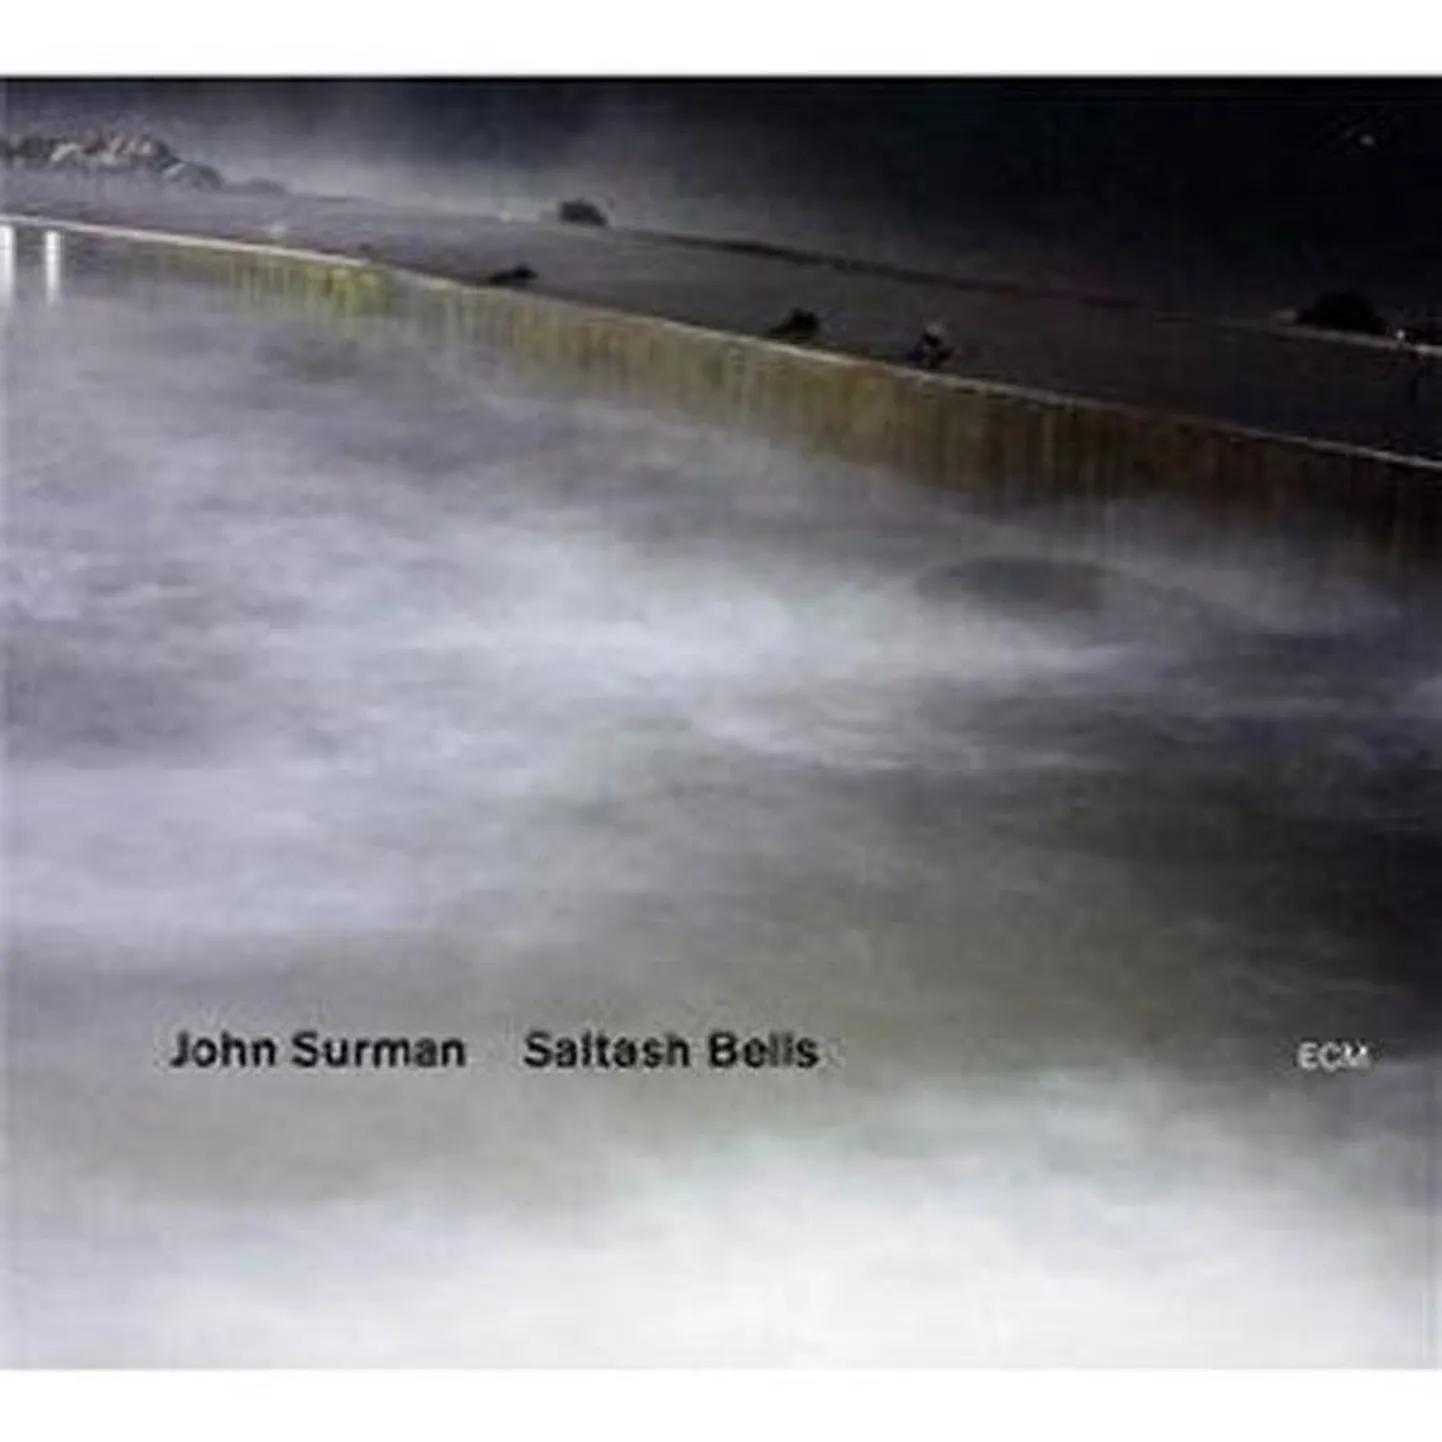 John Surman
Saltash Bells 
(ECM)